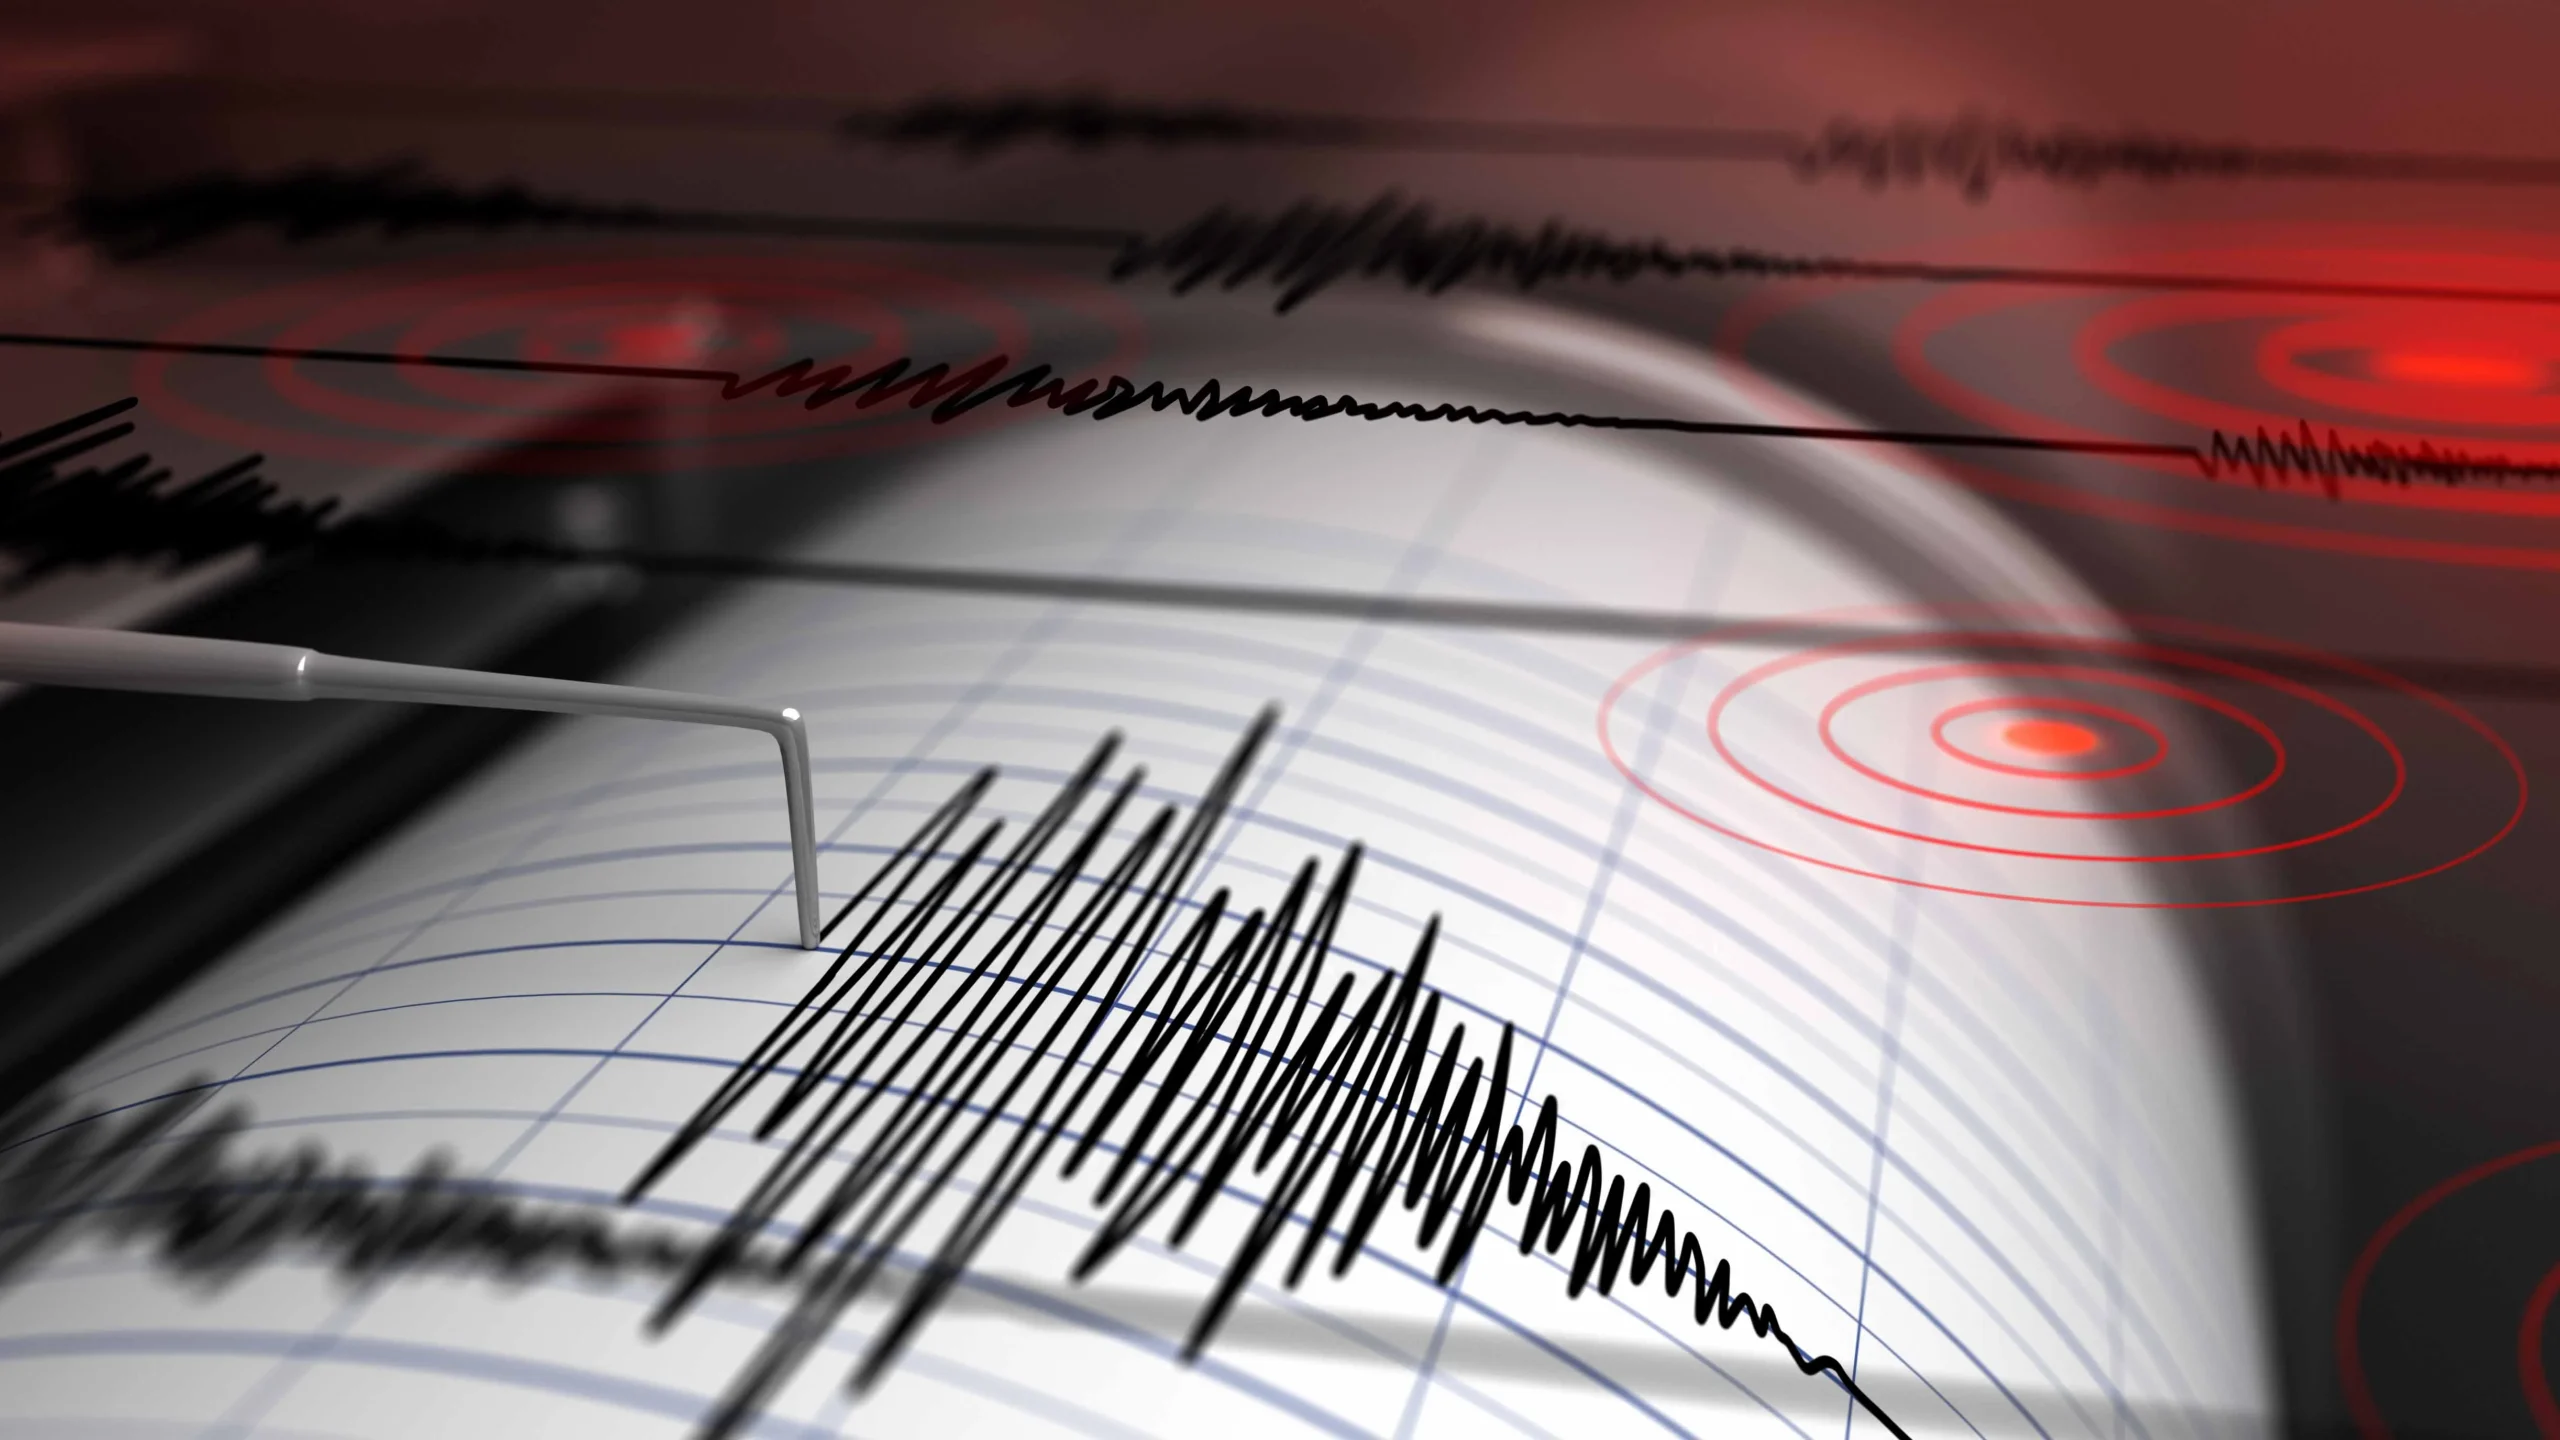 Sismo magnitud 6.9 sacude Perú; autoridades piden tener calma ante posibles replicas